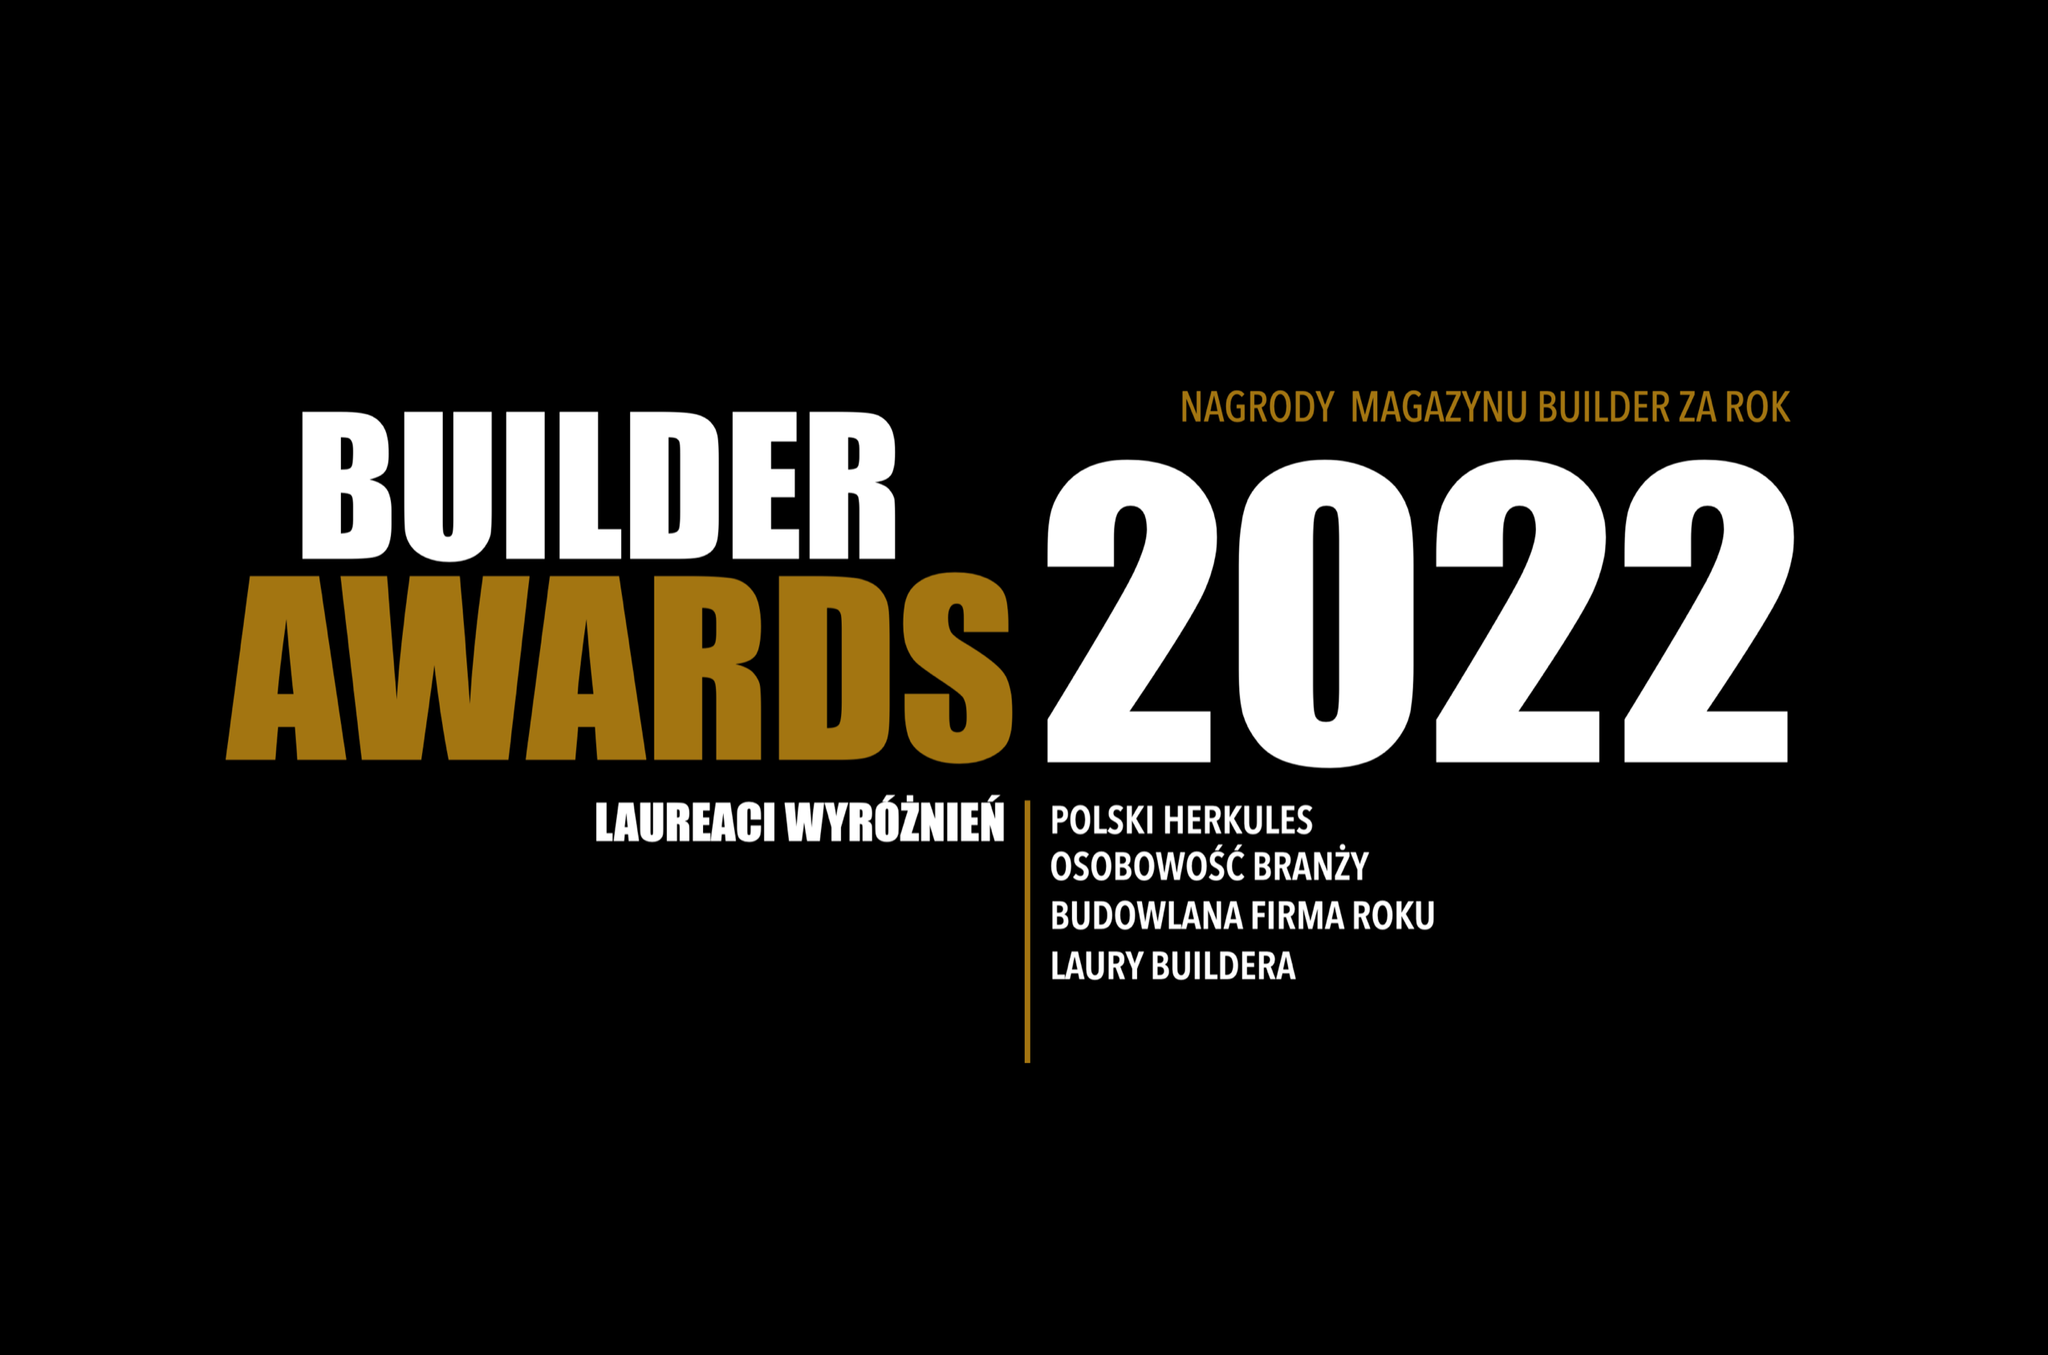 BUILDER AWARDS 2022 – LAUREACI